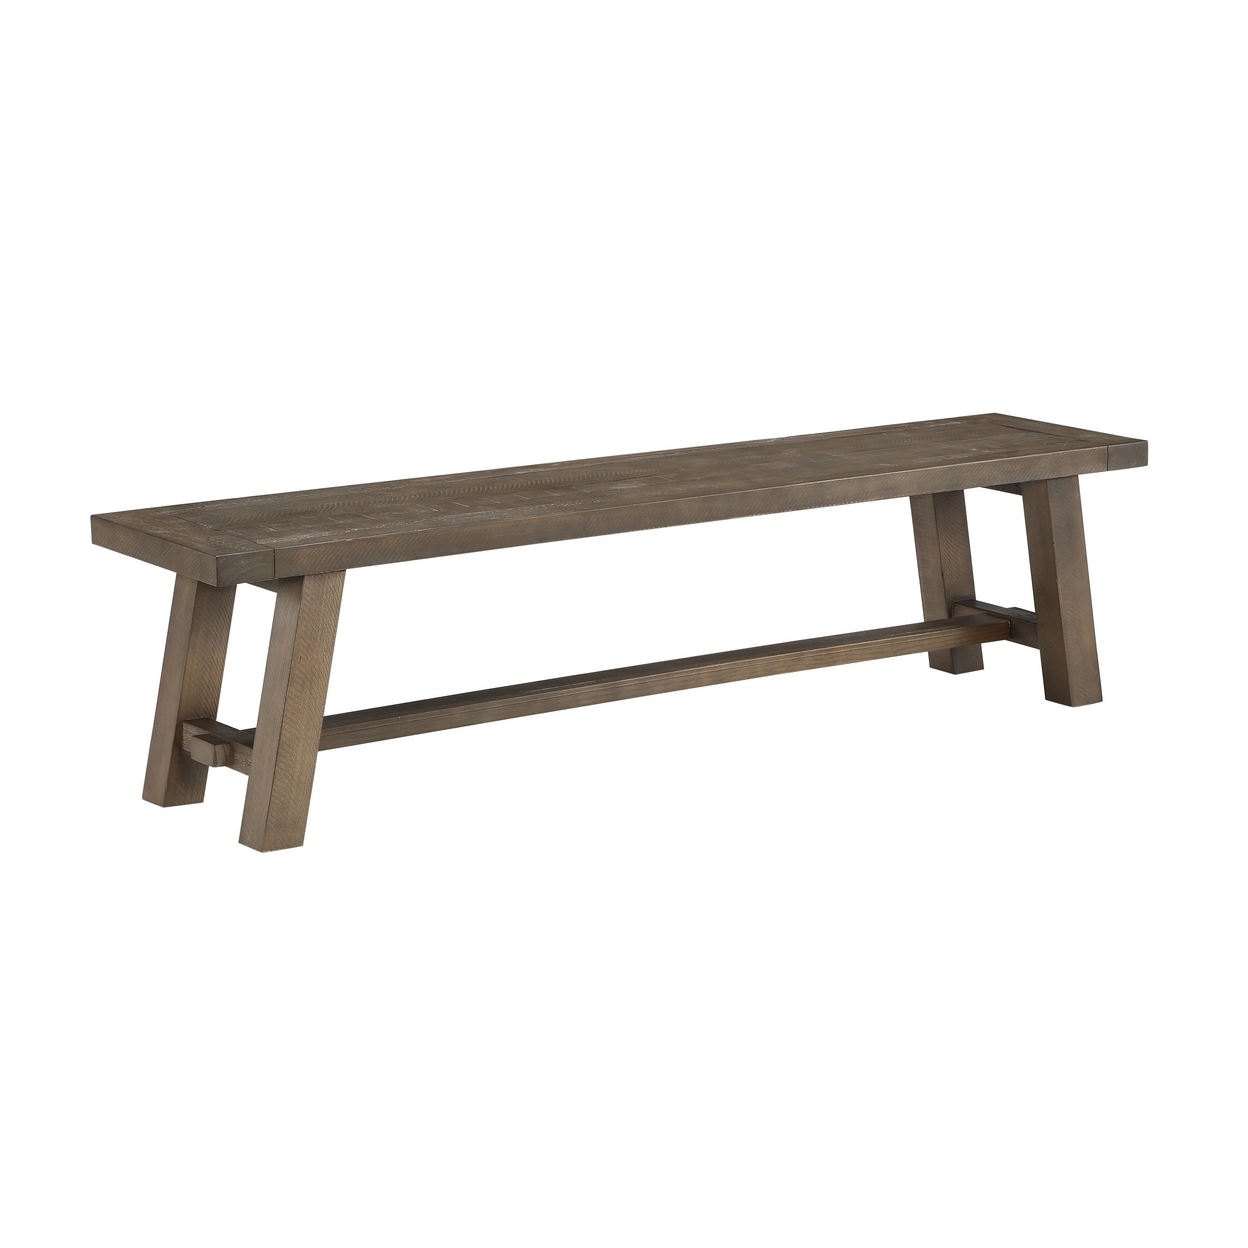 Tarn 72 Inch Dining Bench, Angled Legs, Grain Design, Rustic Gray Pine Wood -Saltoro Sherpi